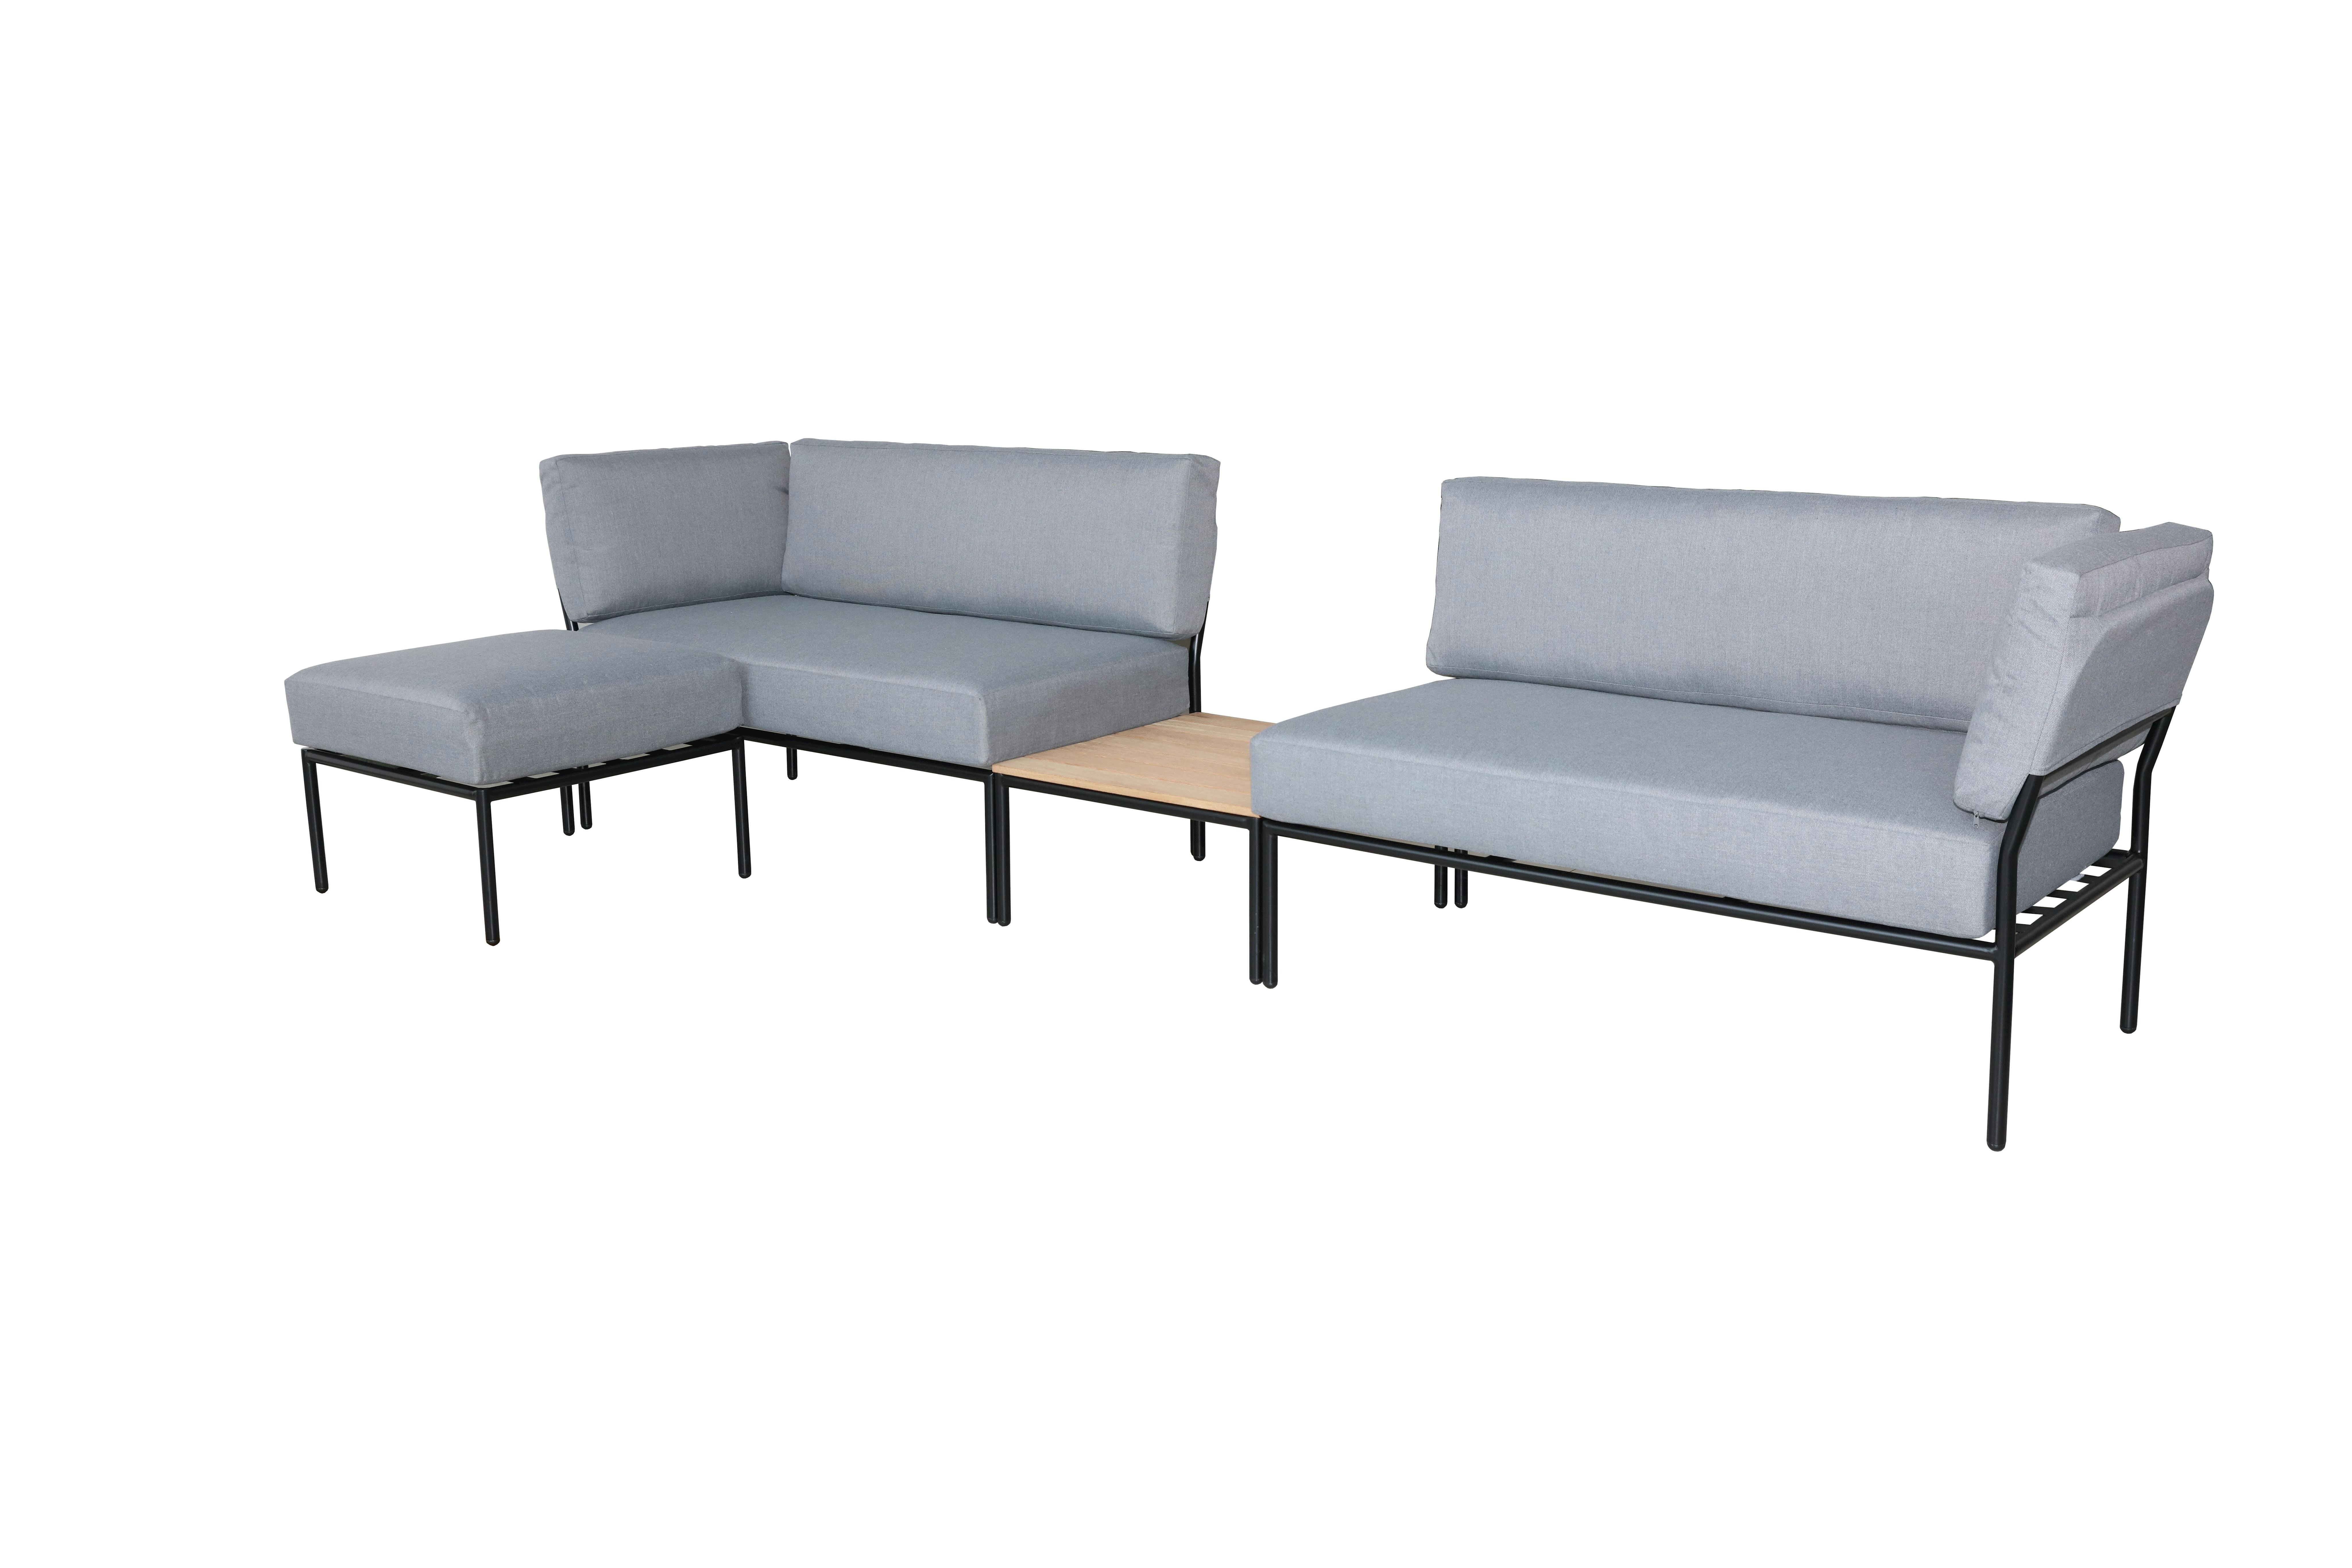 METRO Professional modulaire loungeset, staal/teak/polyester, x 71,5 x 72 incl. kussens, grijs, 4-delig. MAKRO Webshop